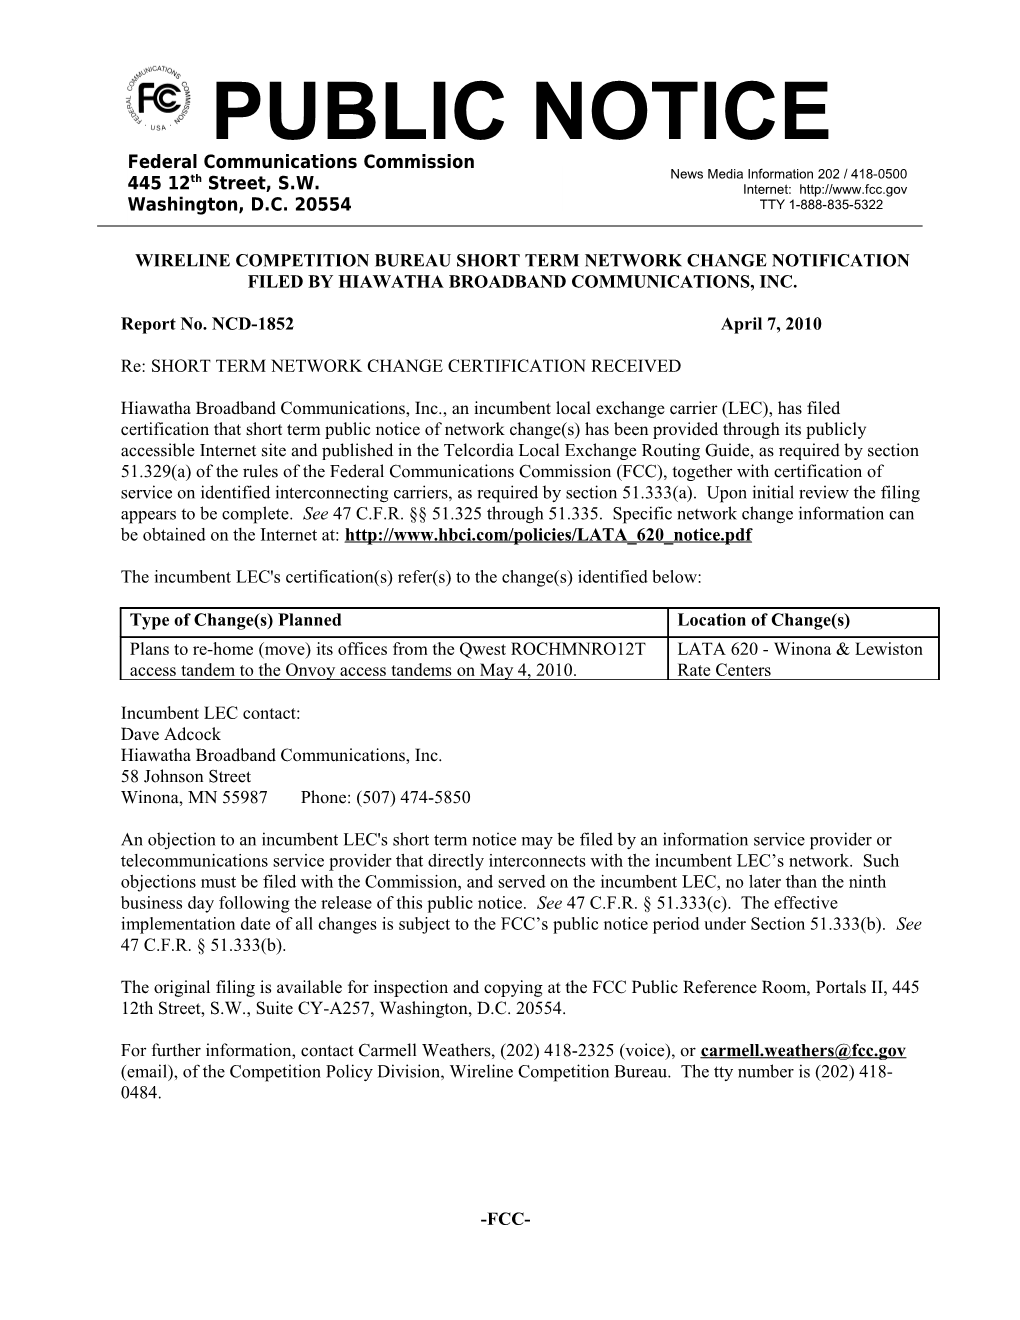 Wireline Competition Bureau Short Term Network Change Notification Filed by Hiawatha Broadband